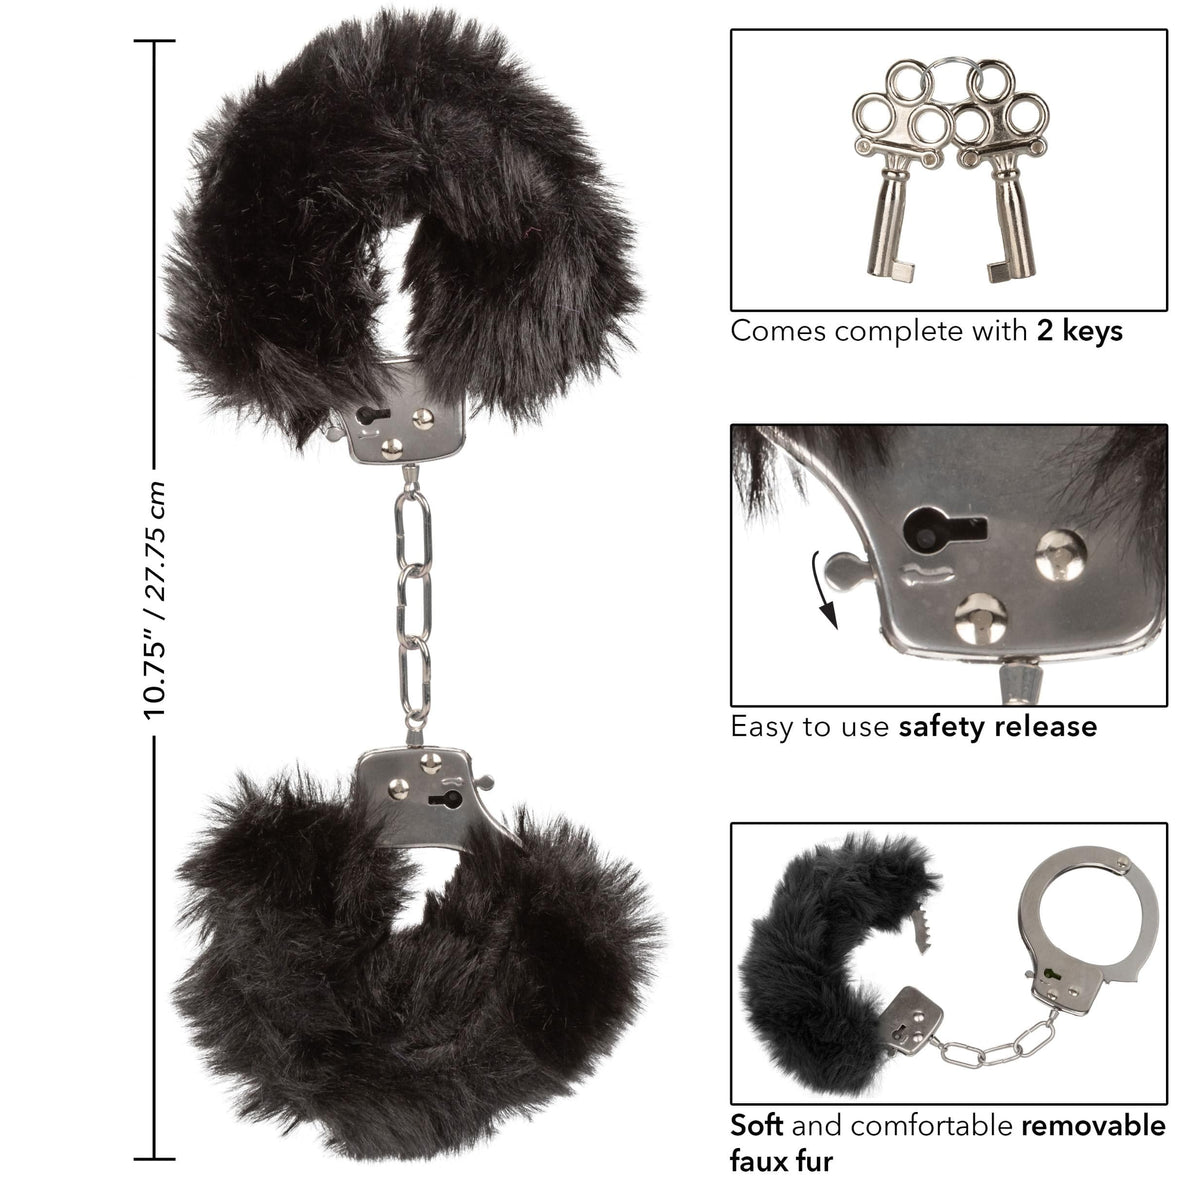 ultra fluffy furry cuffs black